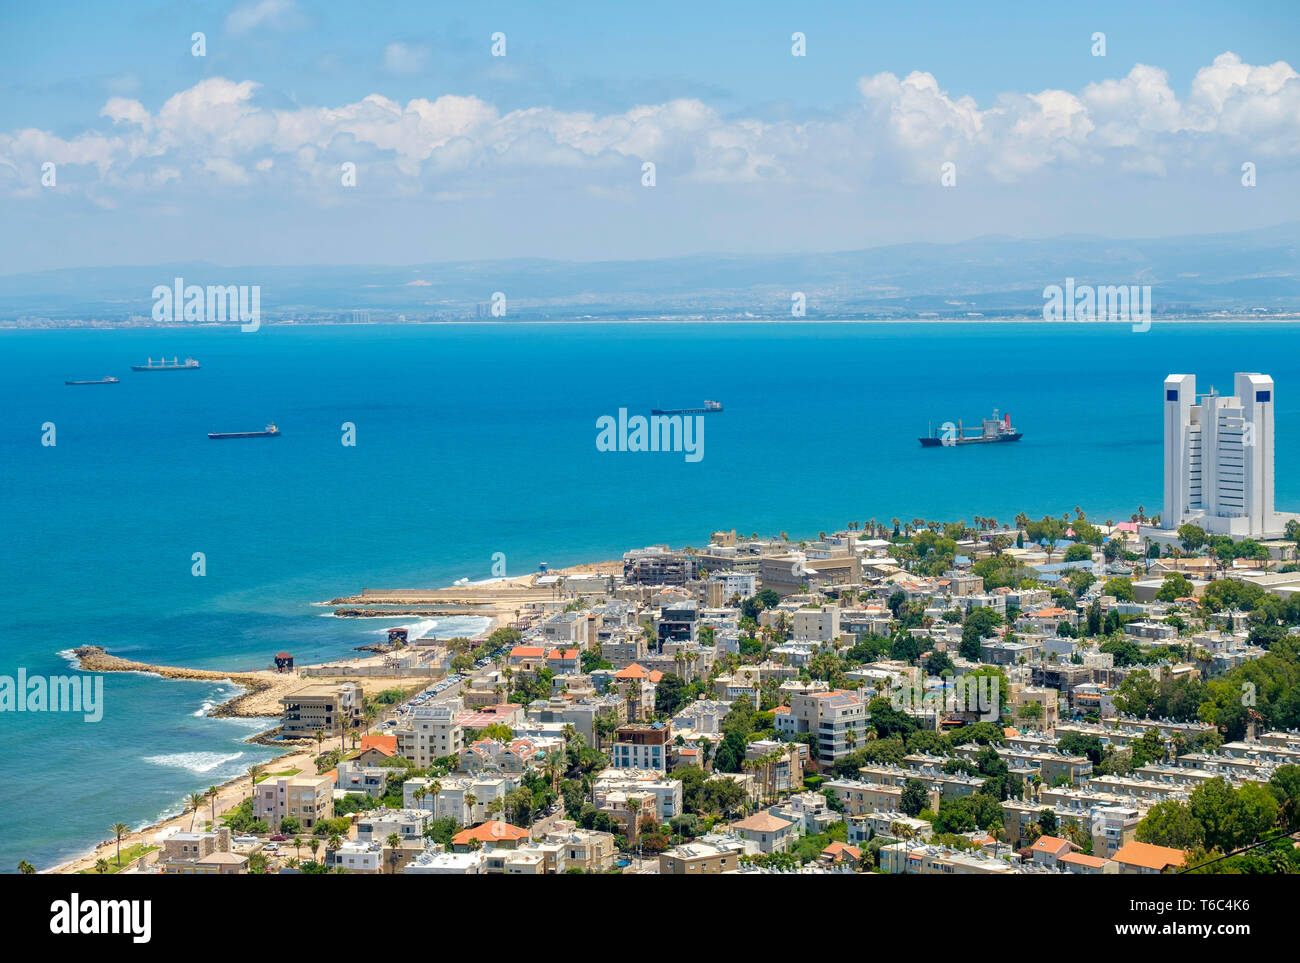 Israel, Haifa District, Haifa. High-angle view of downtown Haifa from Mount Carmel. Stock Photo